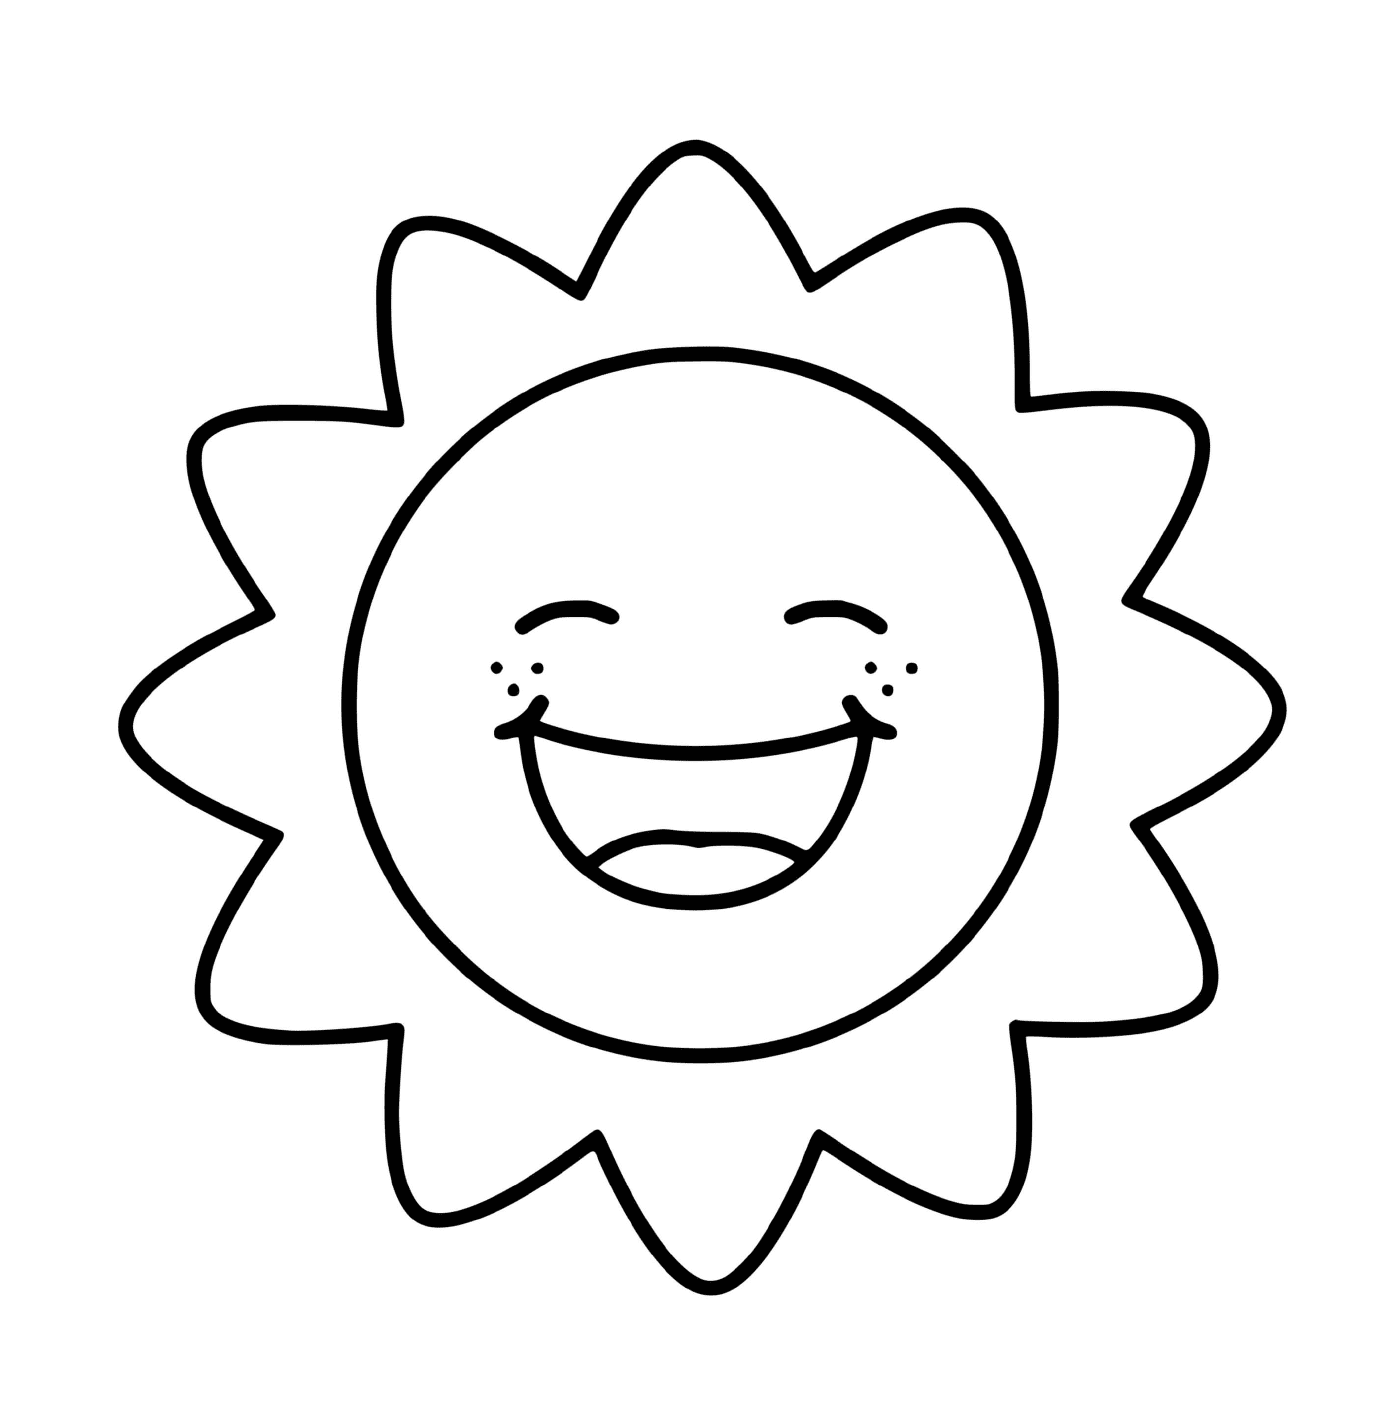  Sunshine kawaii sonriendo 